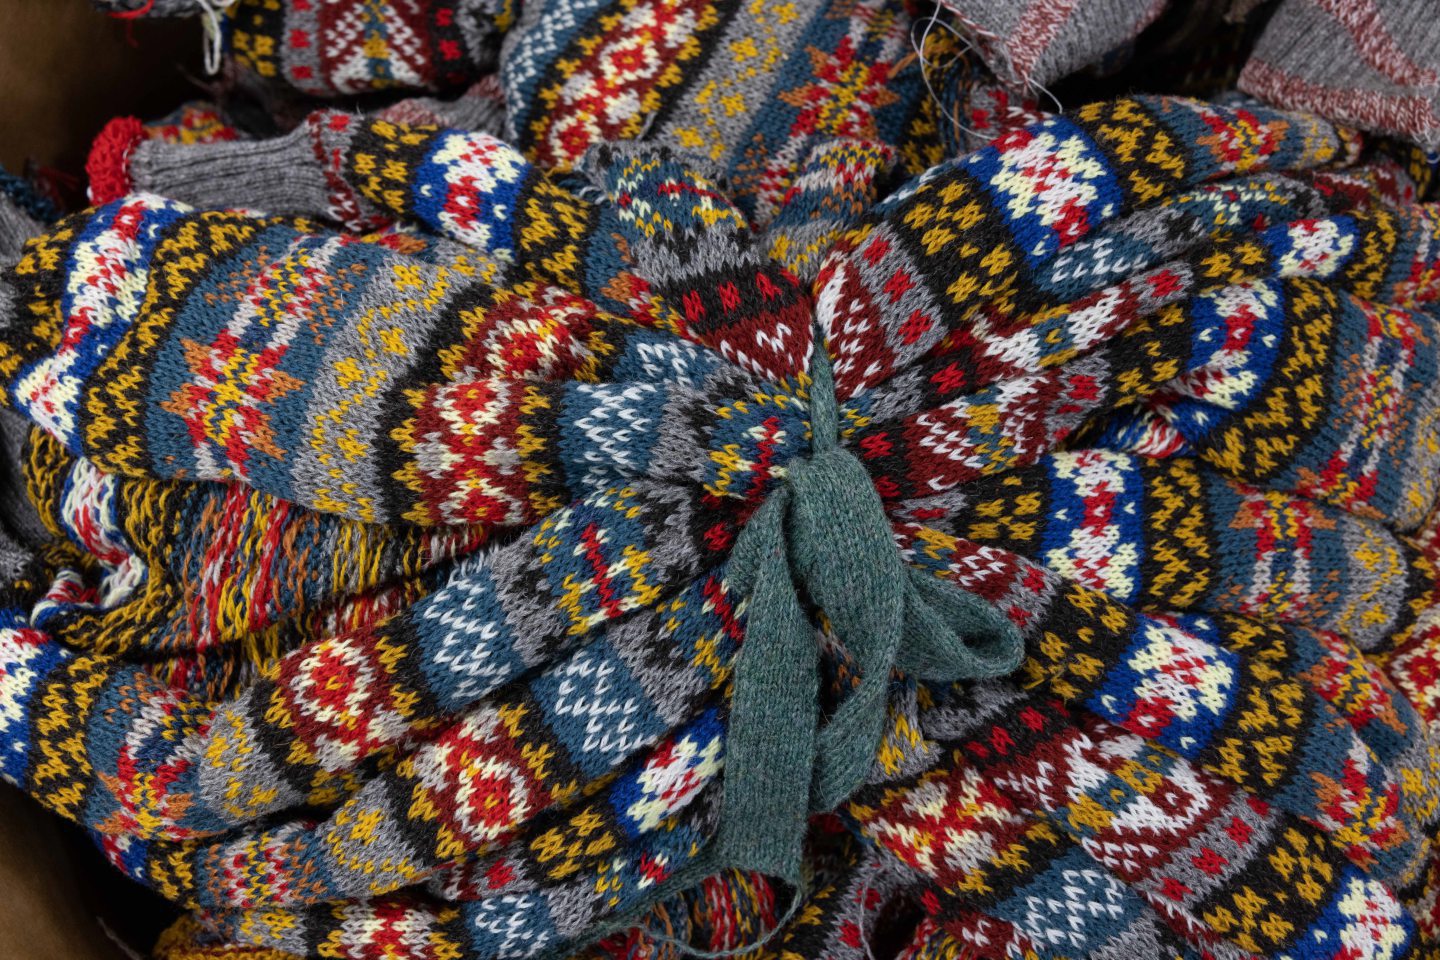 Jamieson's knitwear